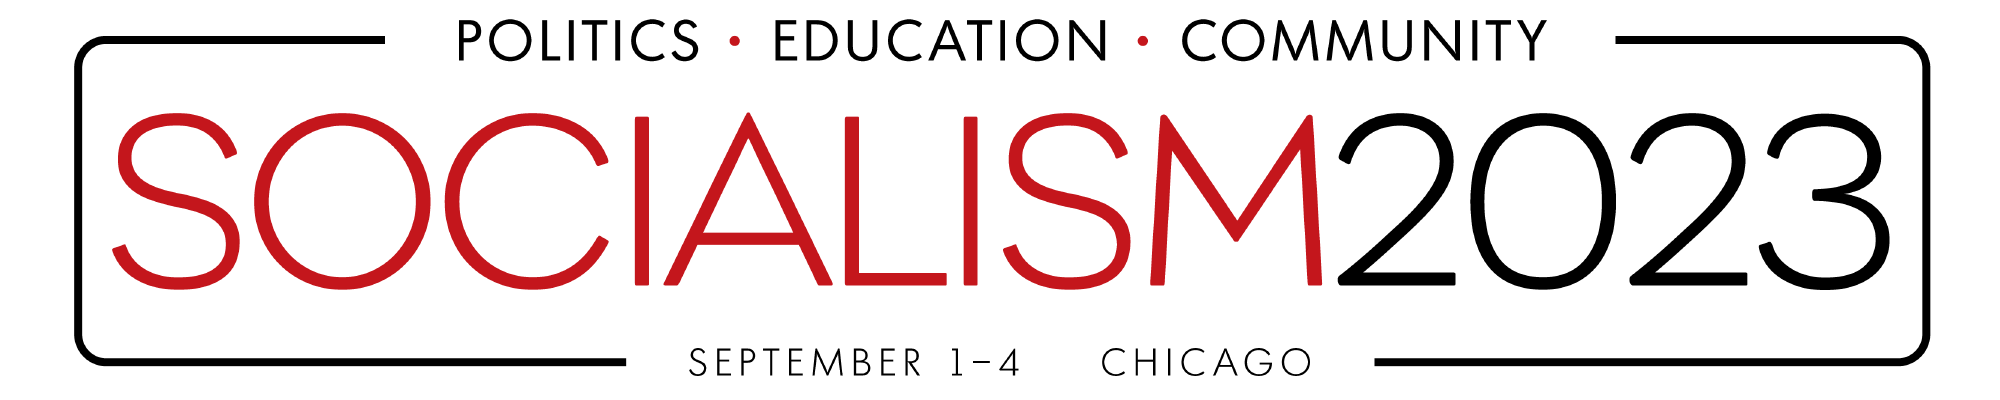 Socialism 2023 logo - September 1-4 Chicago: Politics, Education, Community